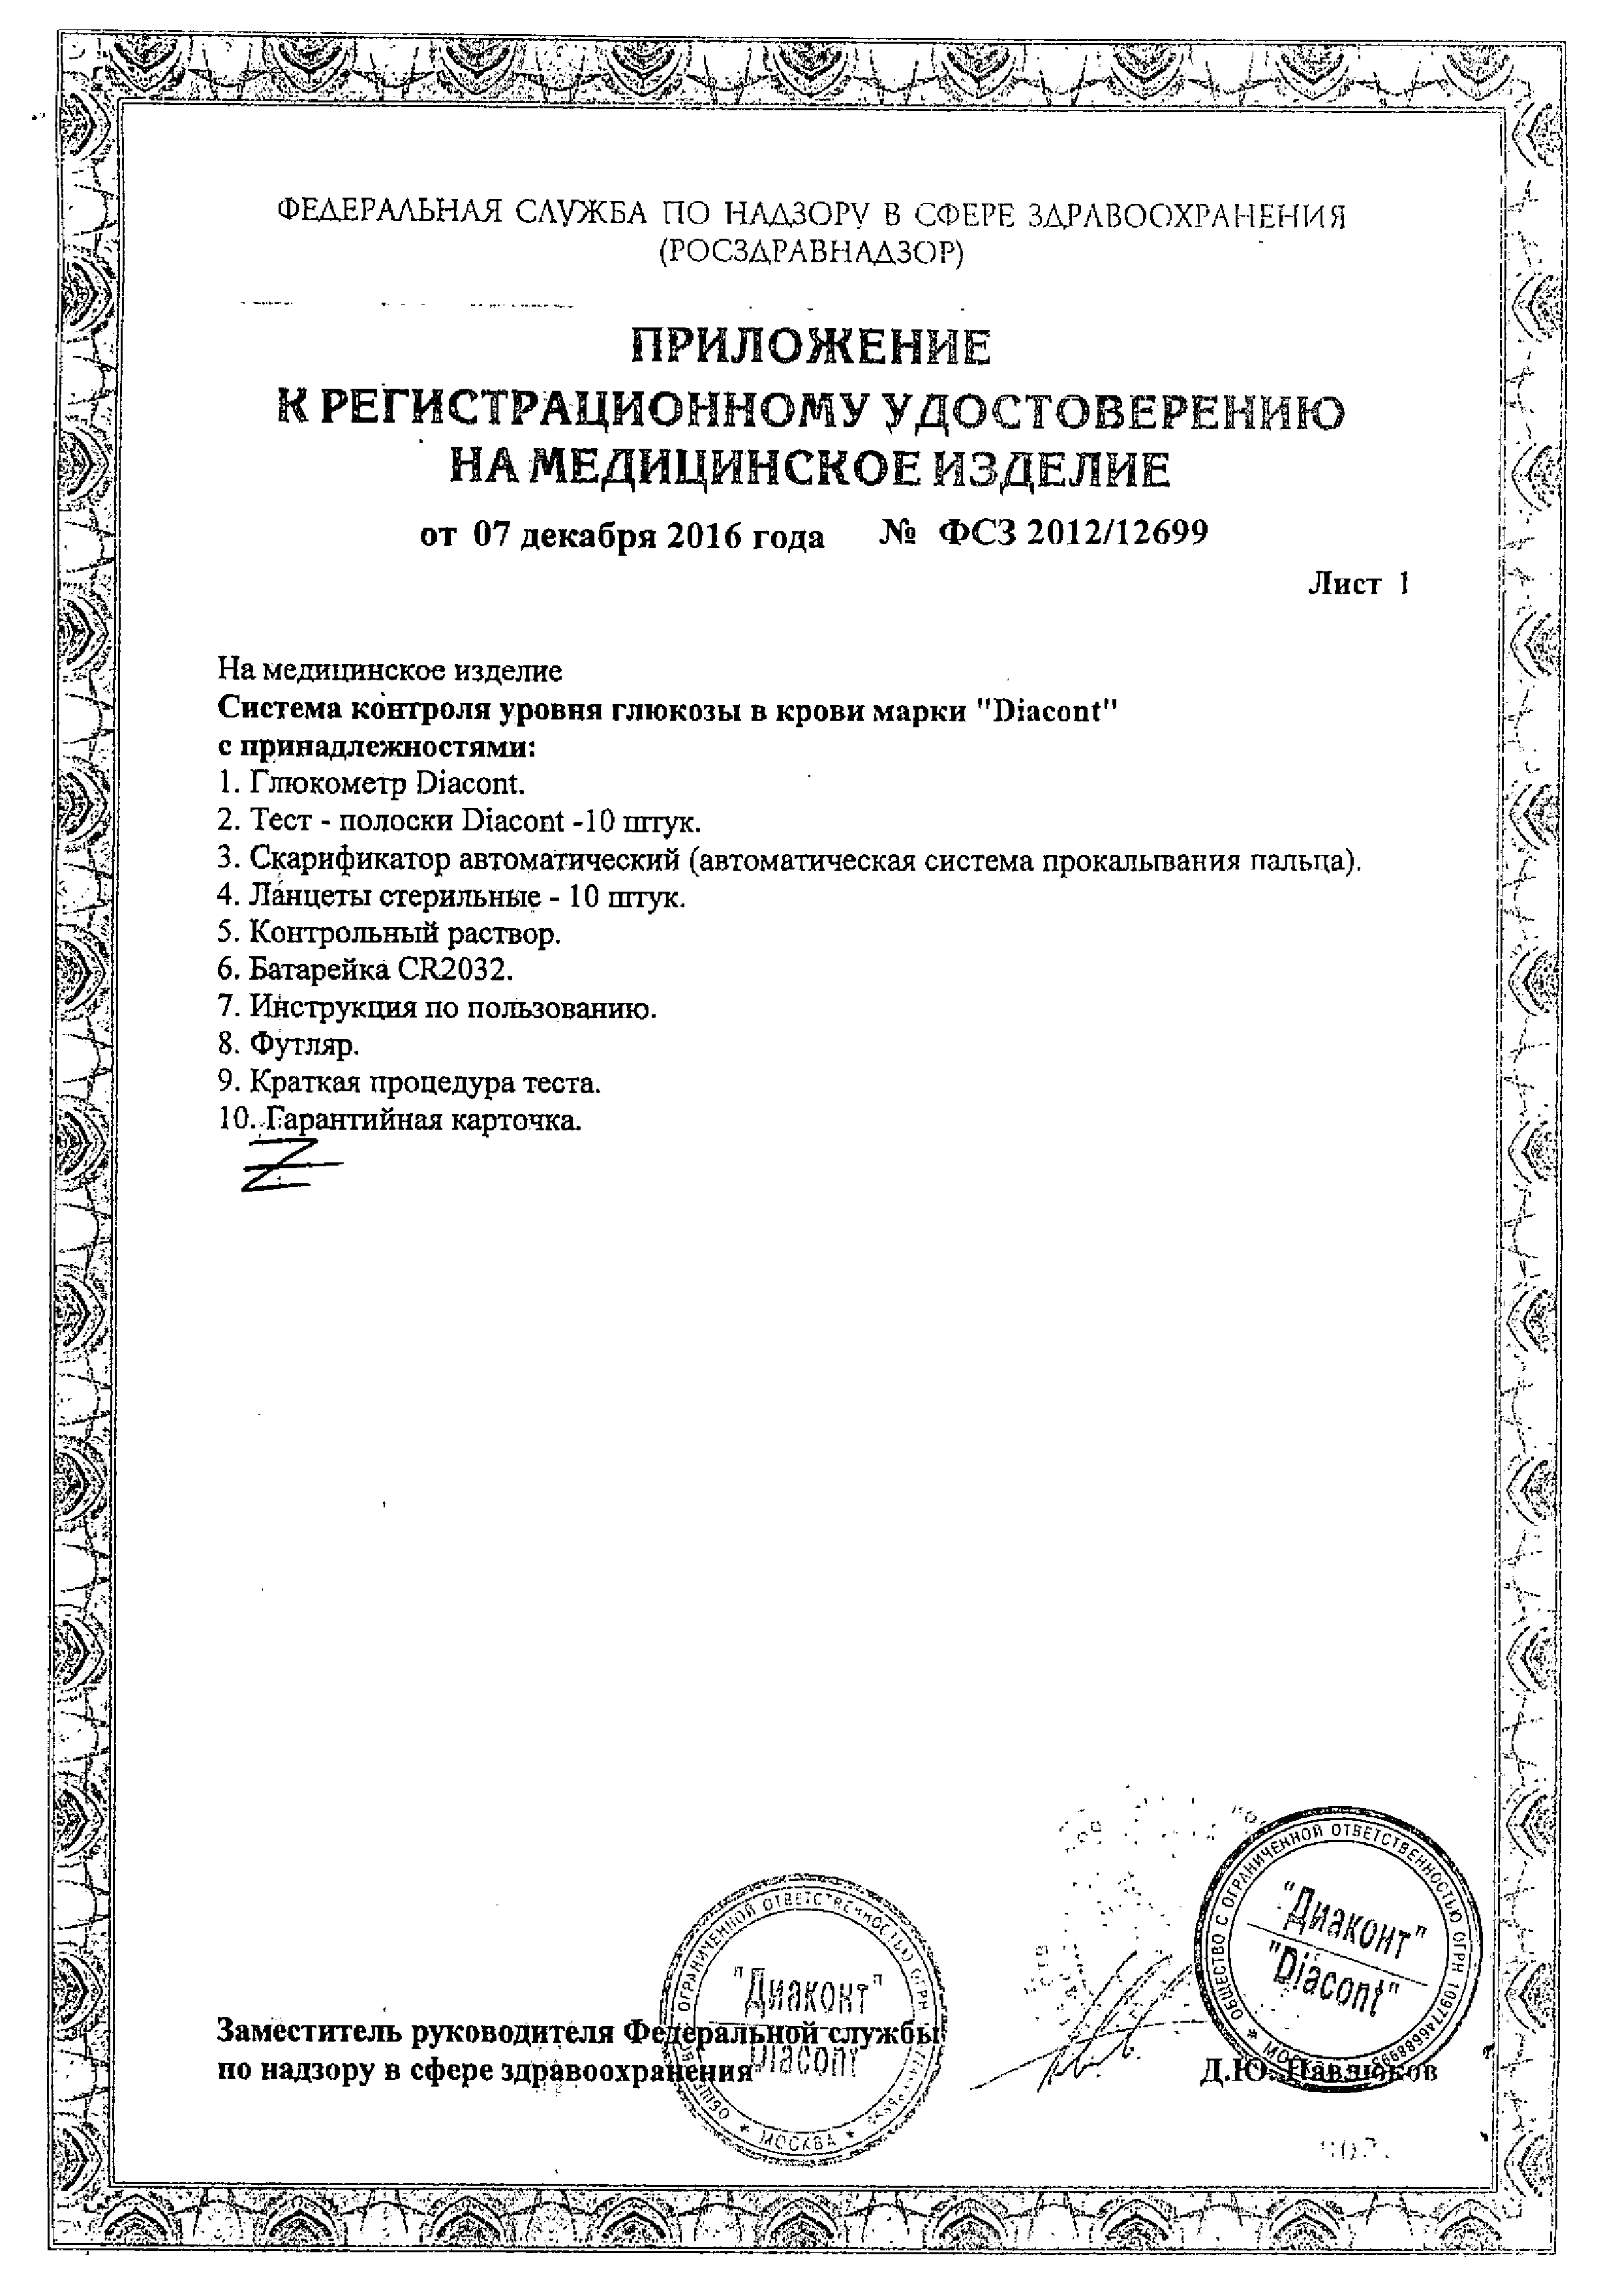 Diacont глюкометр сертификат